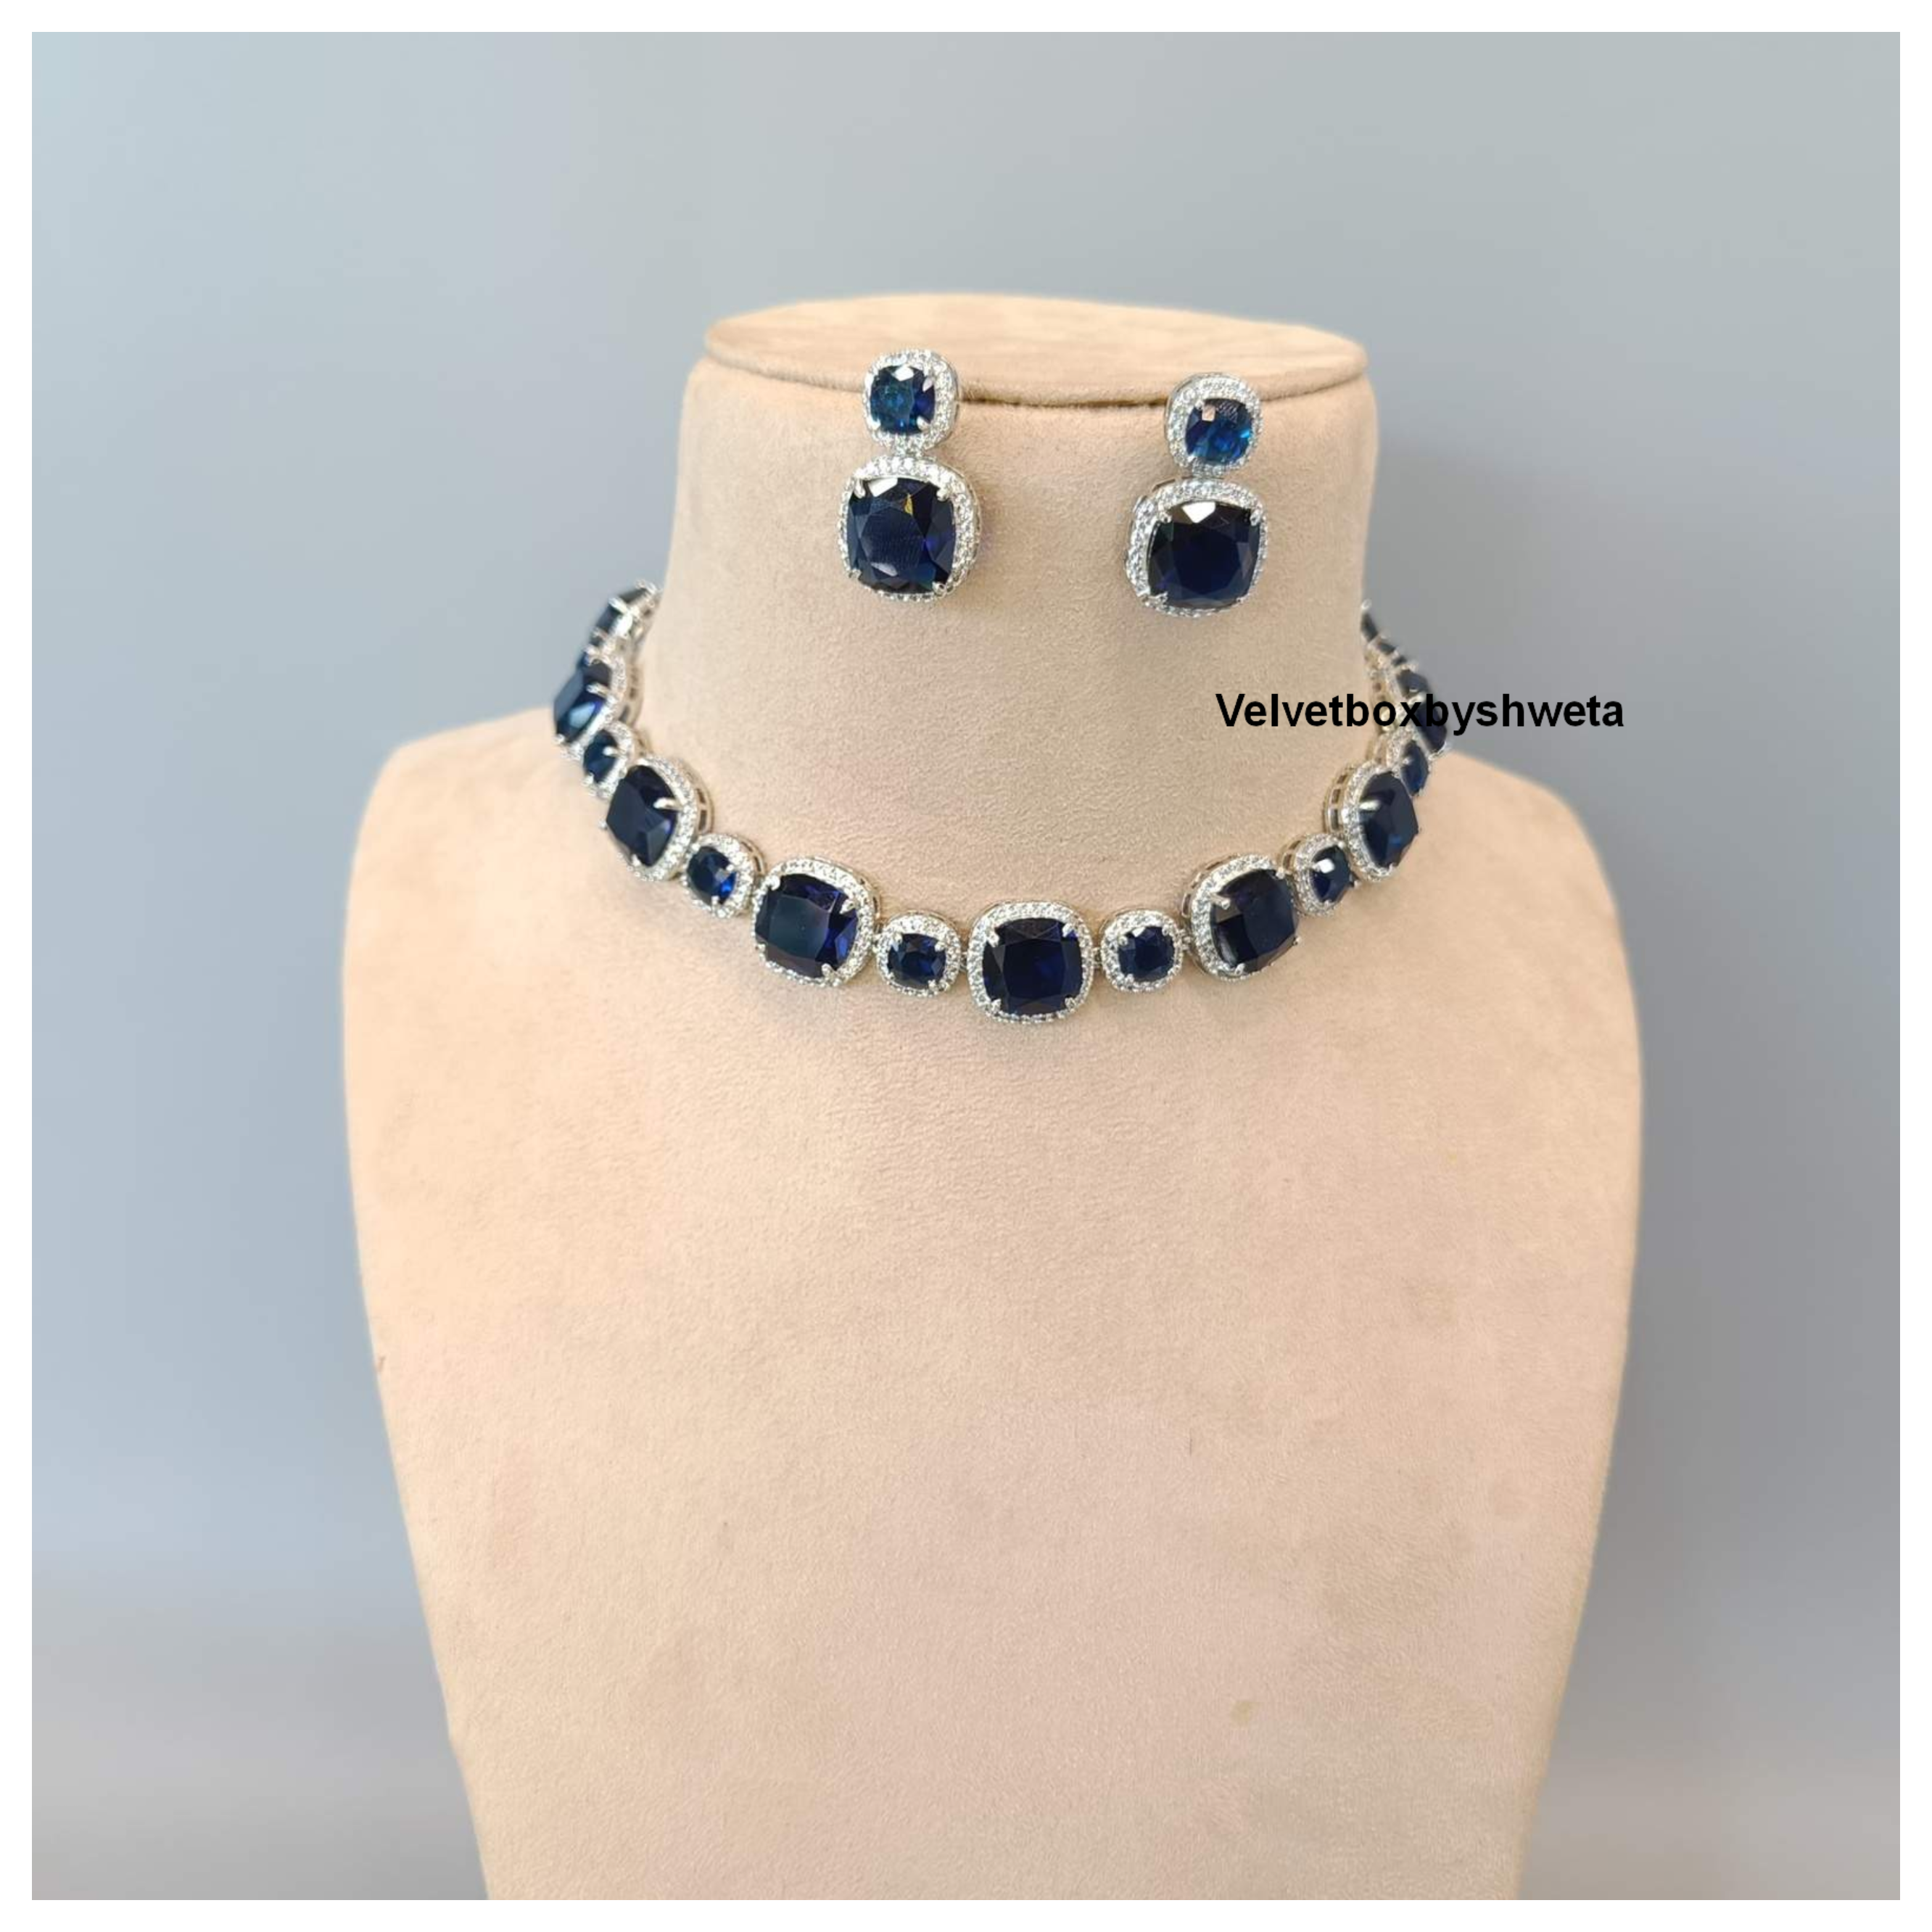 Ad Alisha neckpiece - Blue